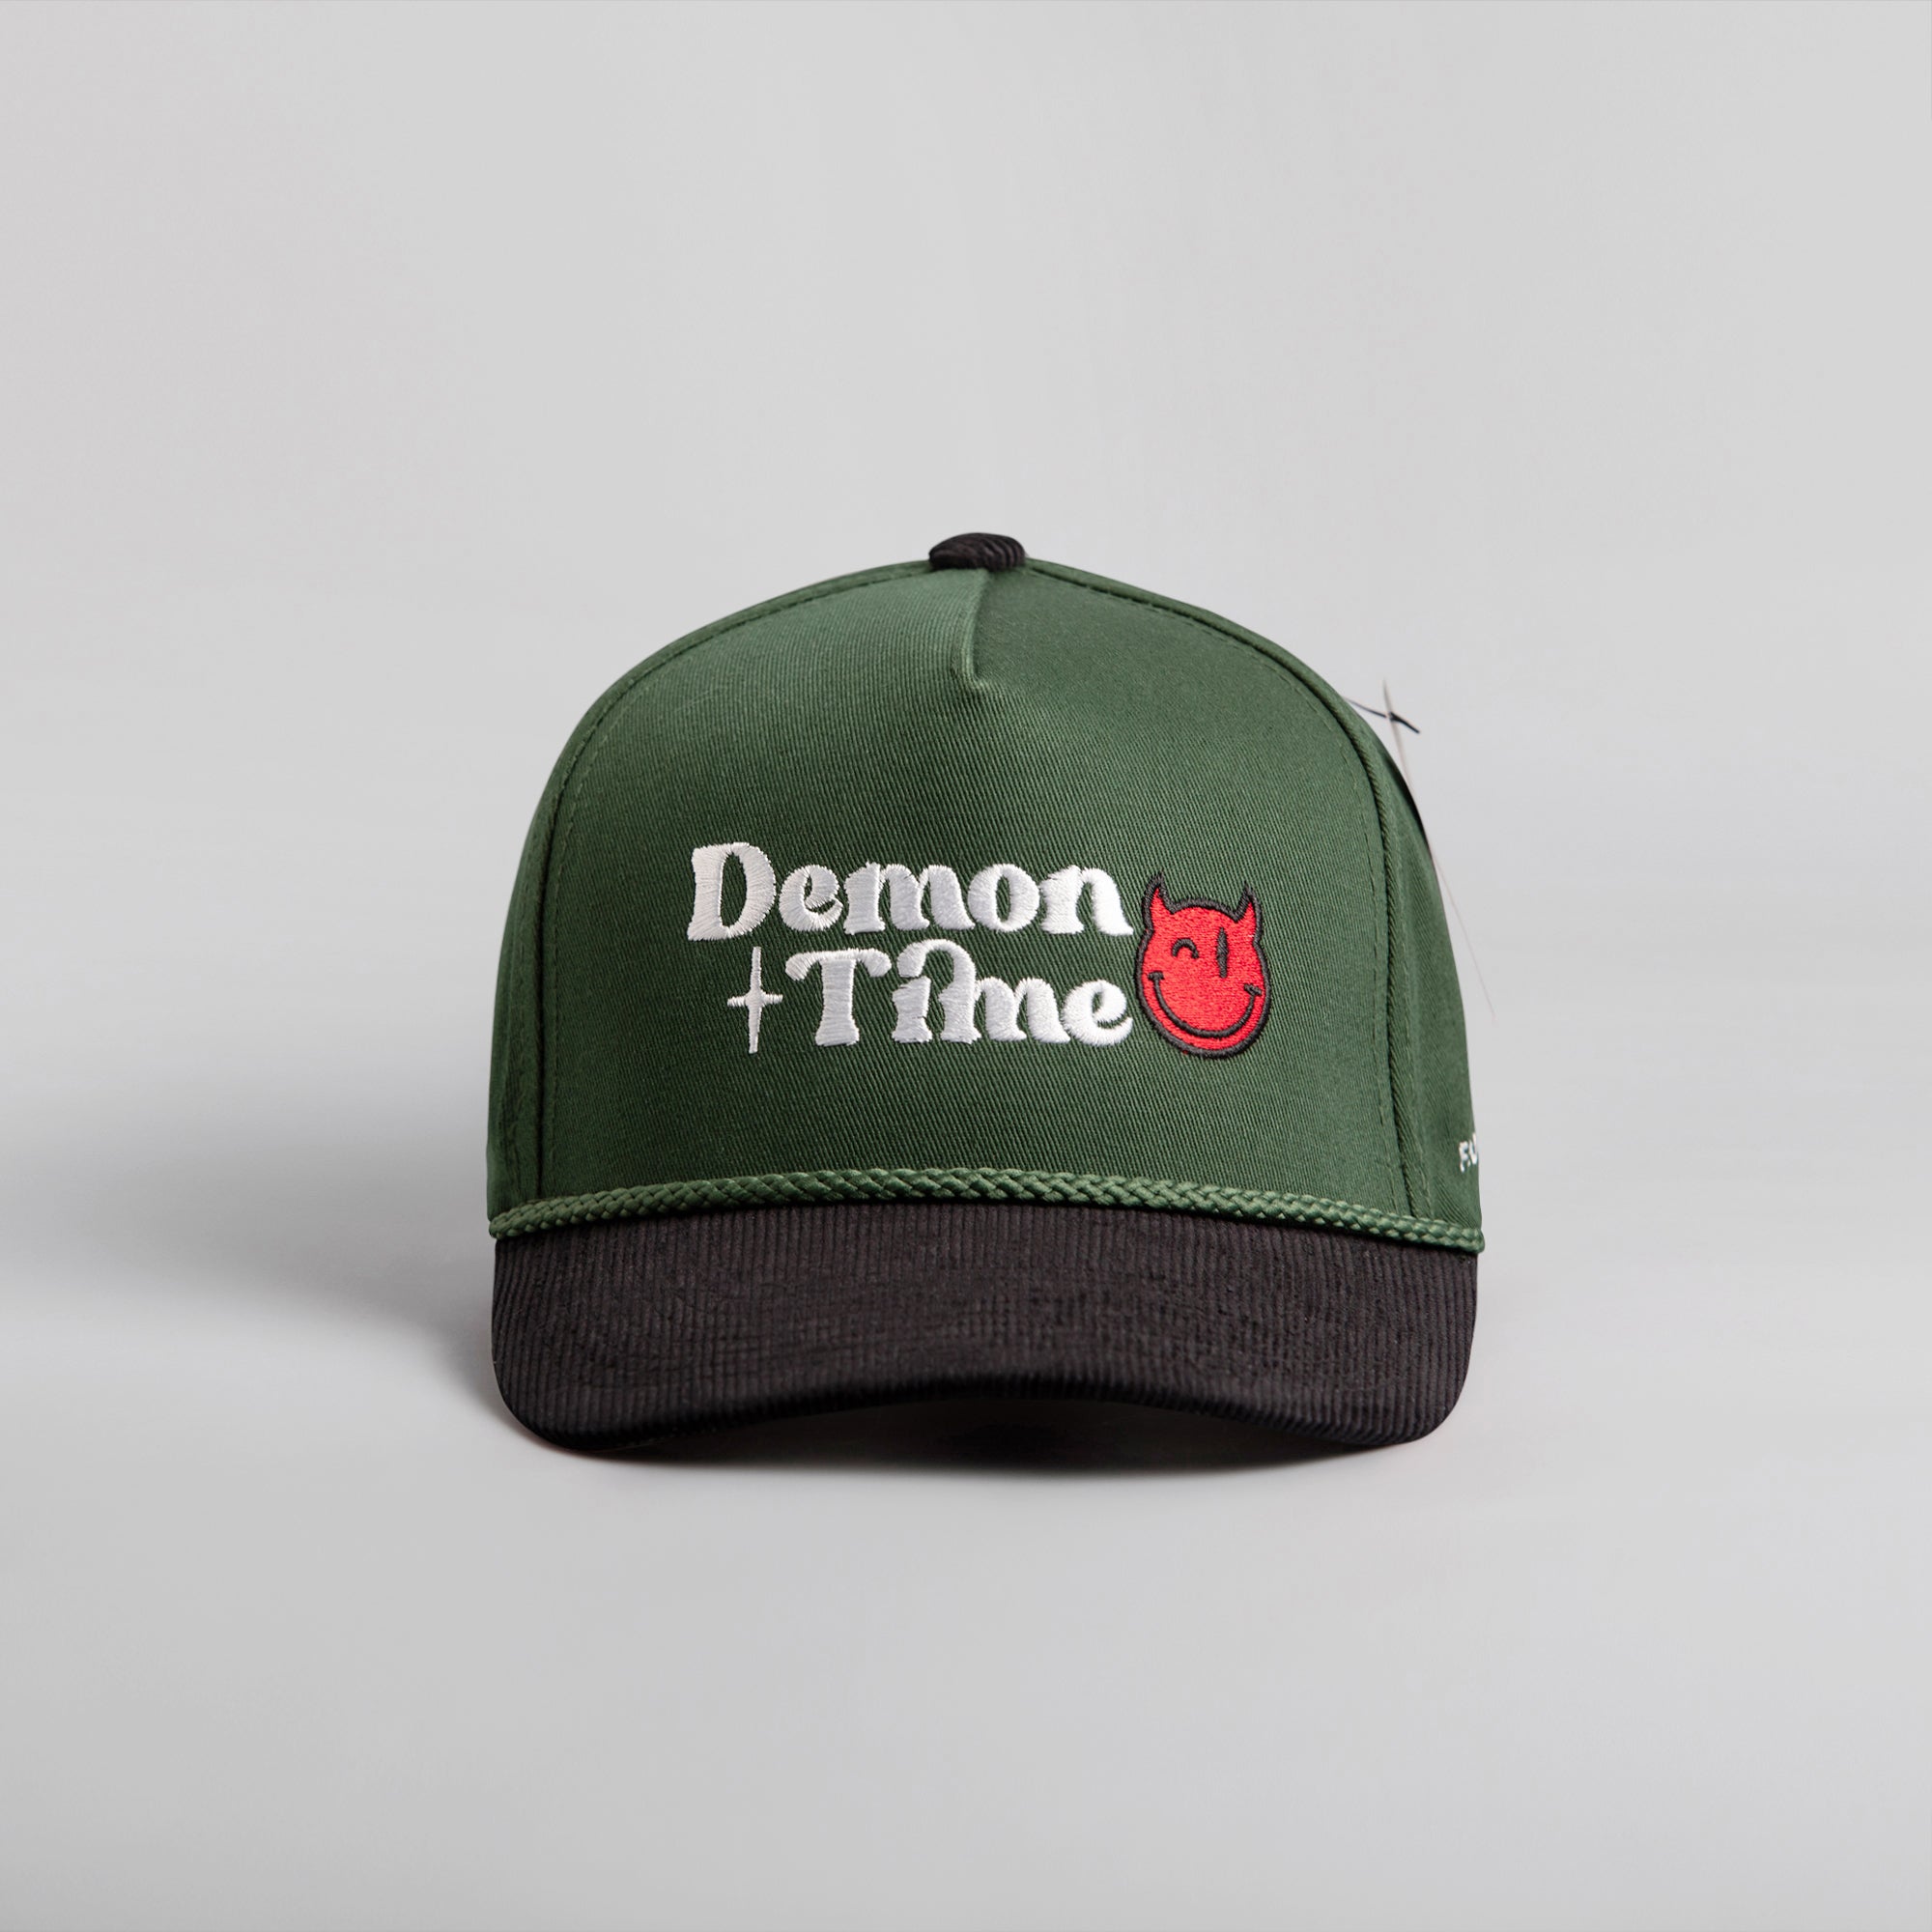 DEMON TIME FG GREEN/BLACK CORDUROY BRIM TRUCKER HAT